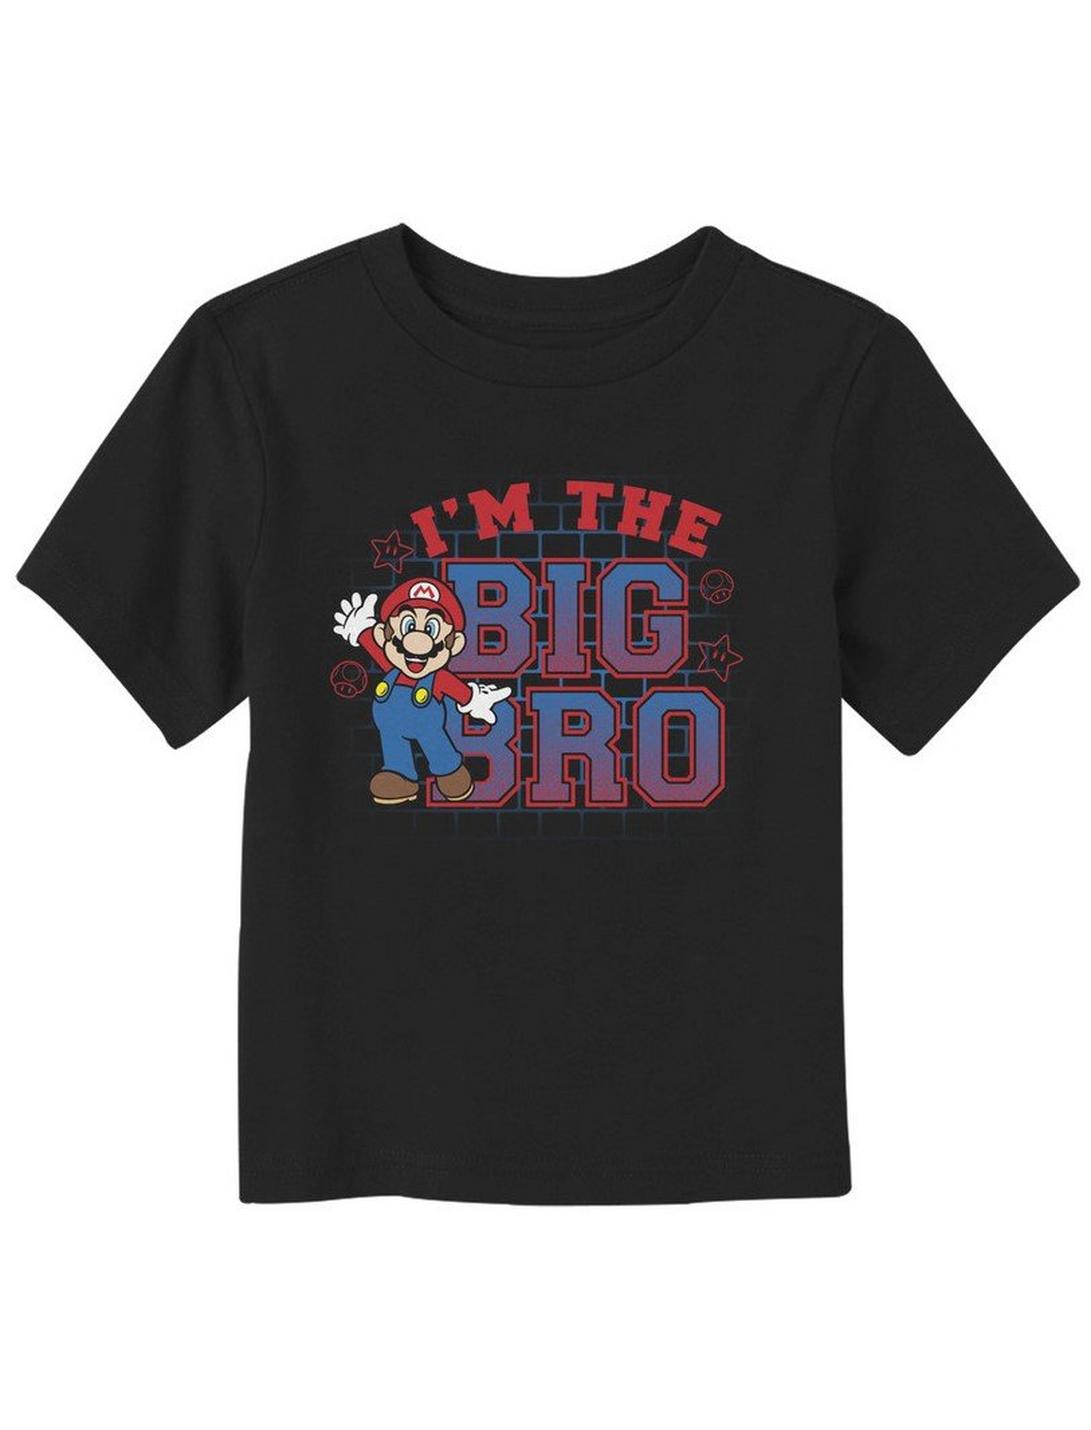 Super Mario Bros. Big Bro Mario Toddler T-Shirt, BLACK, hi-res